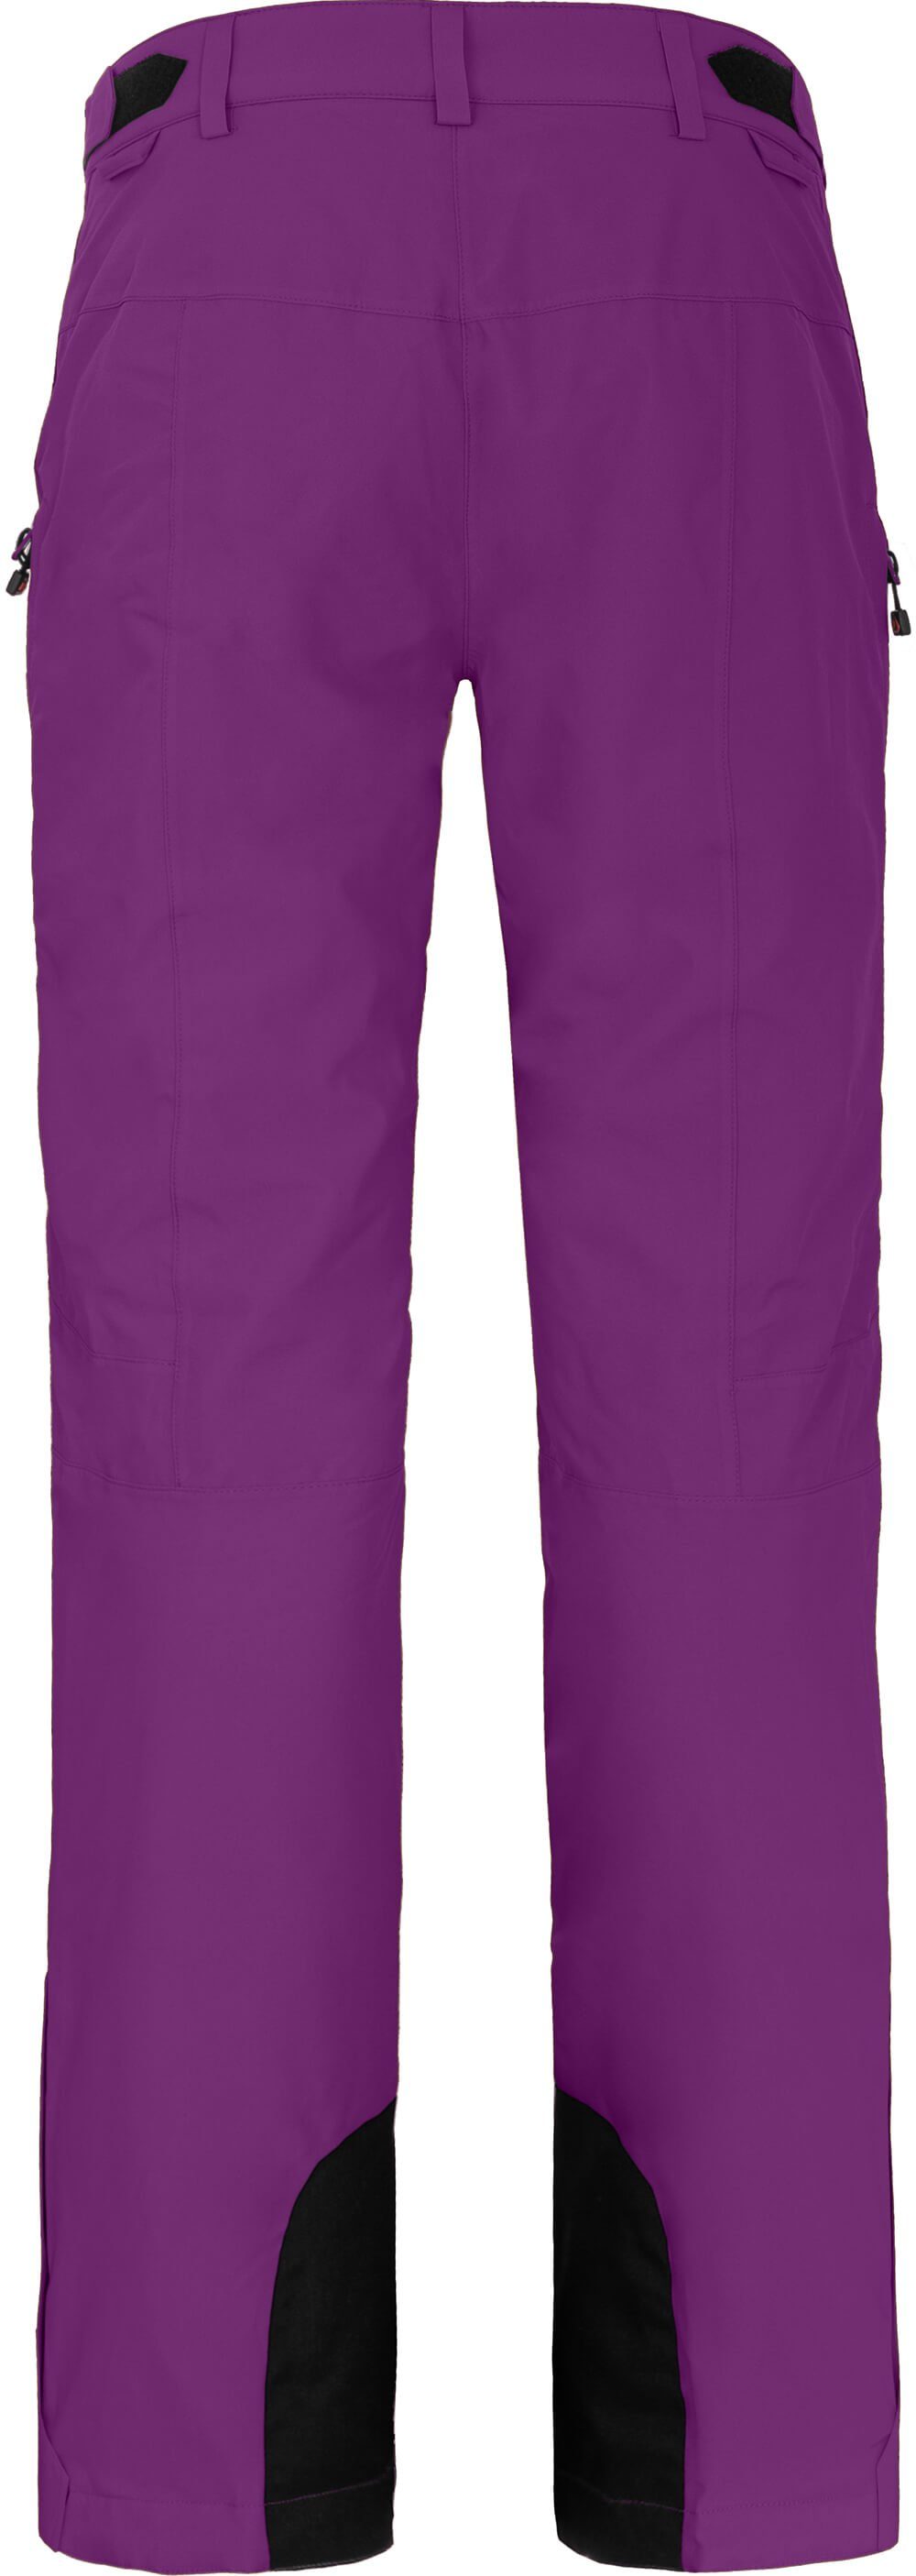 Damen ICE Skihose mm wattiert, violett Kurzgrößen, Skihose, 20000 Bergson Wassersäule,